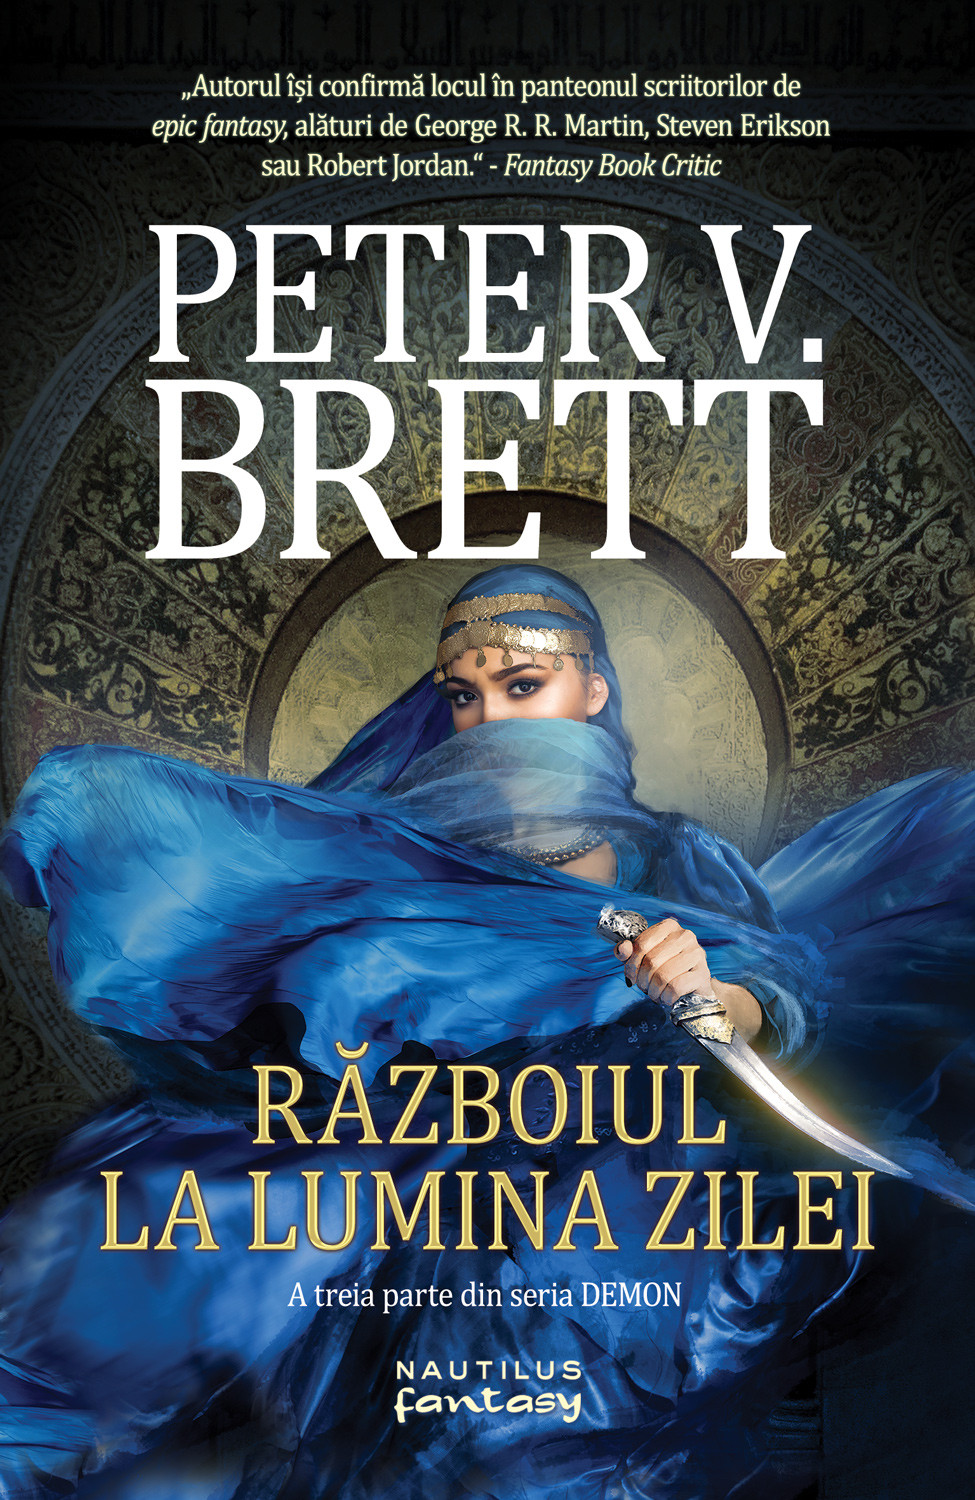 Razboiul la lumina zilei | Peter V. Brett carturesti.ro poza bestsellers.ro